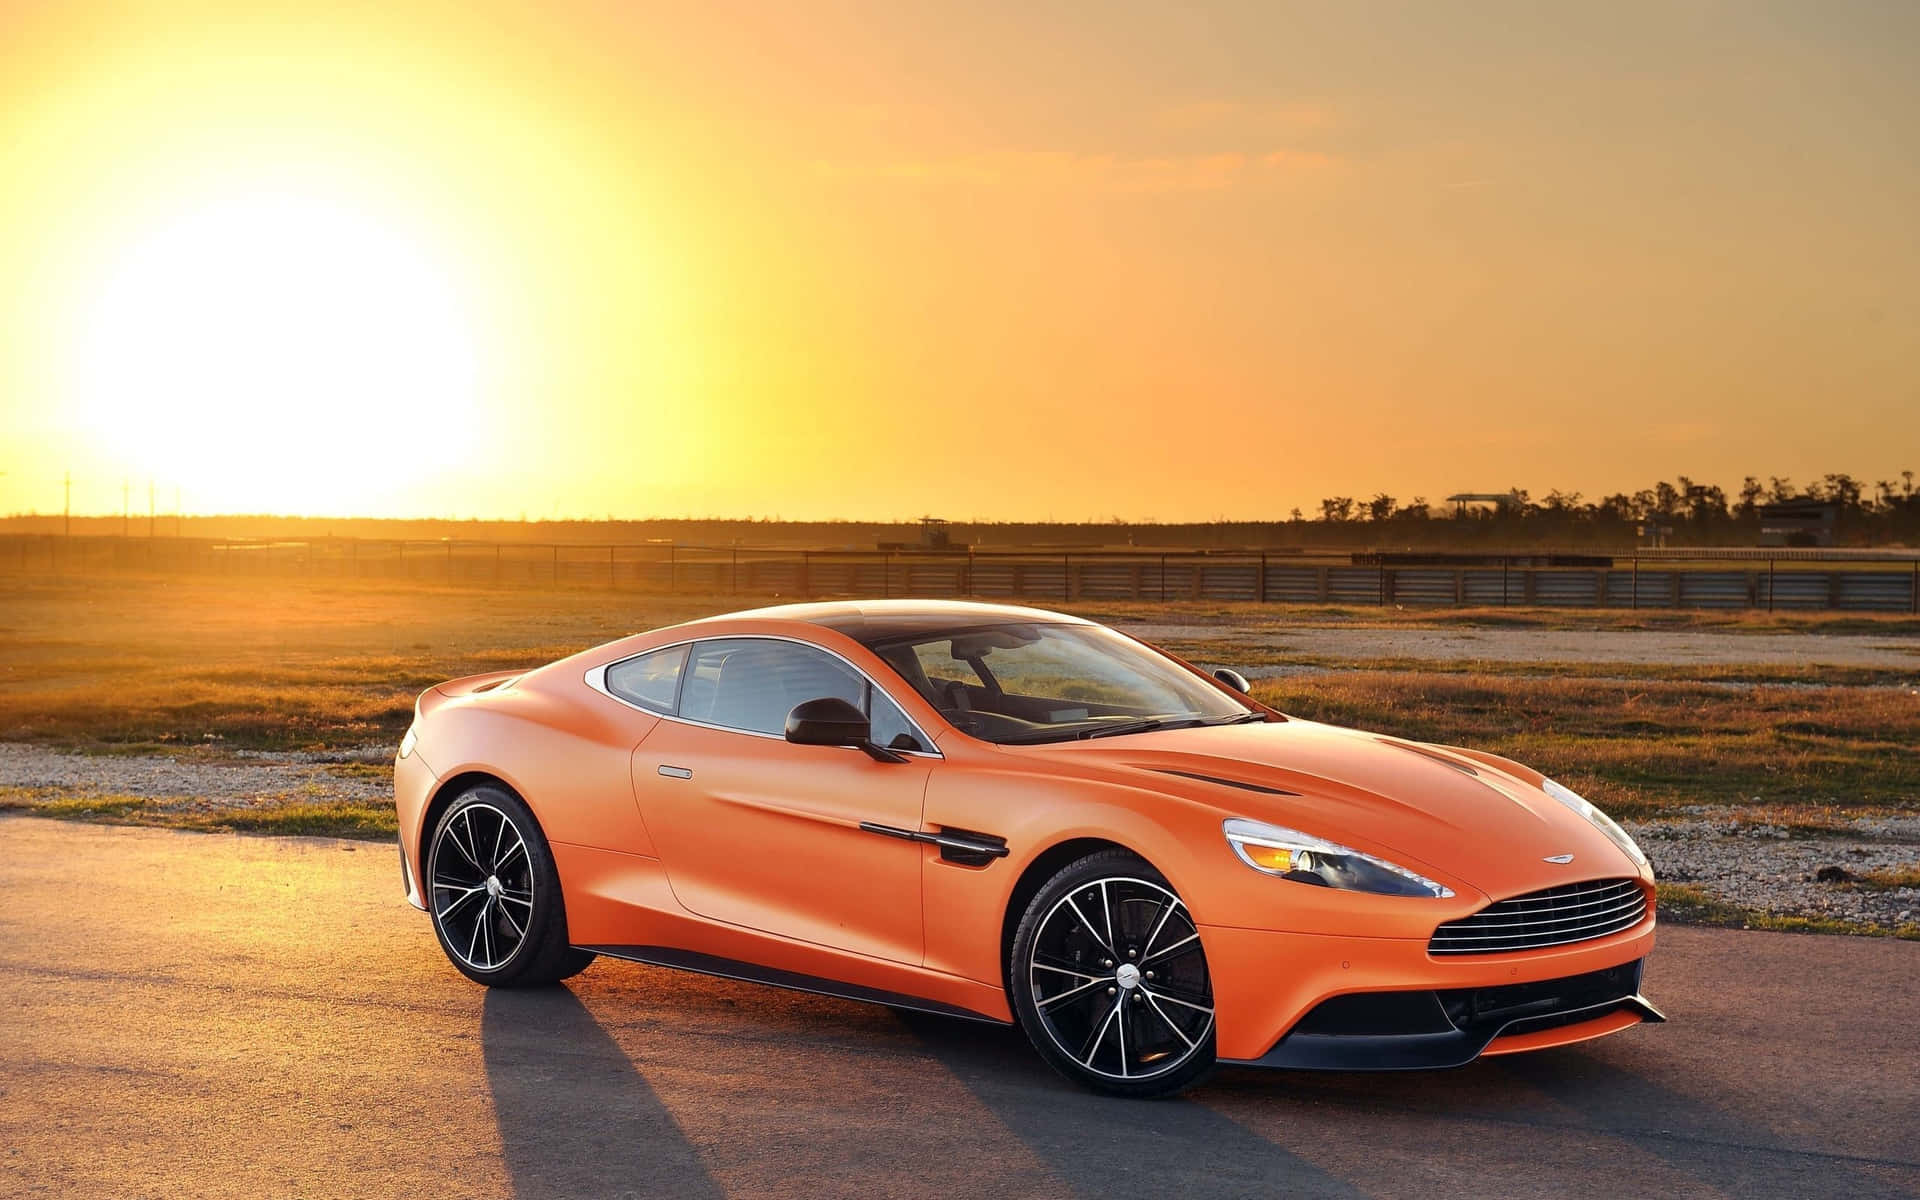 Sleek Aston Martin Vanquish in motion Wallpaper